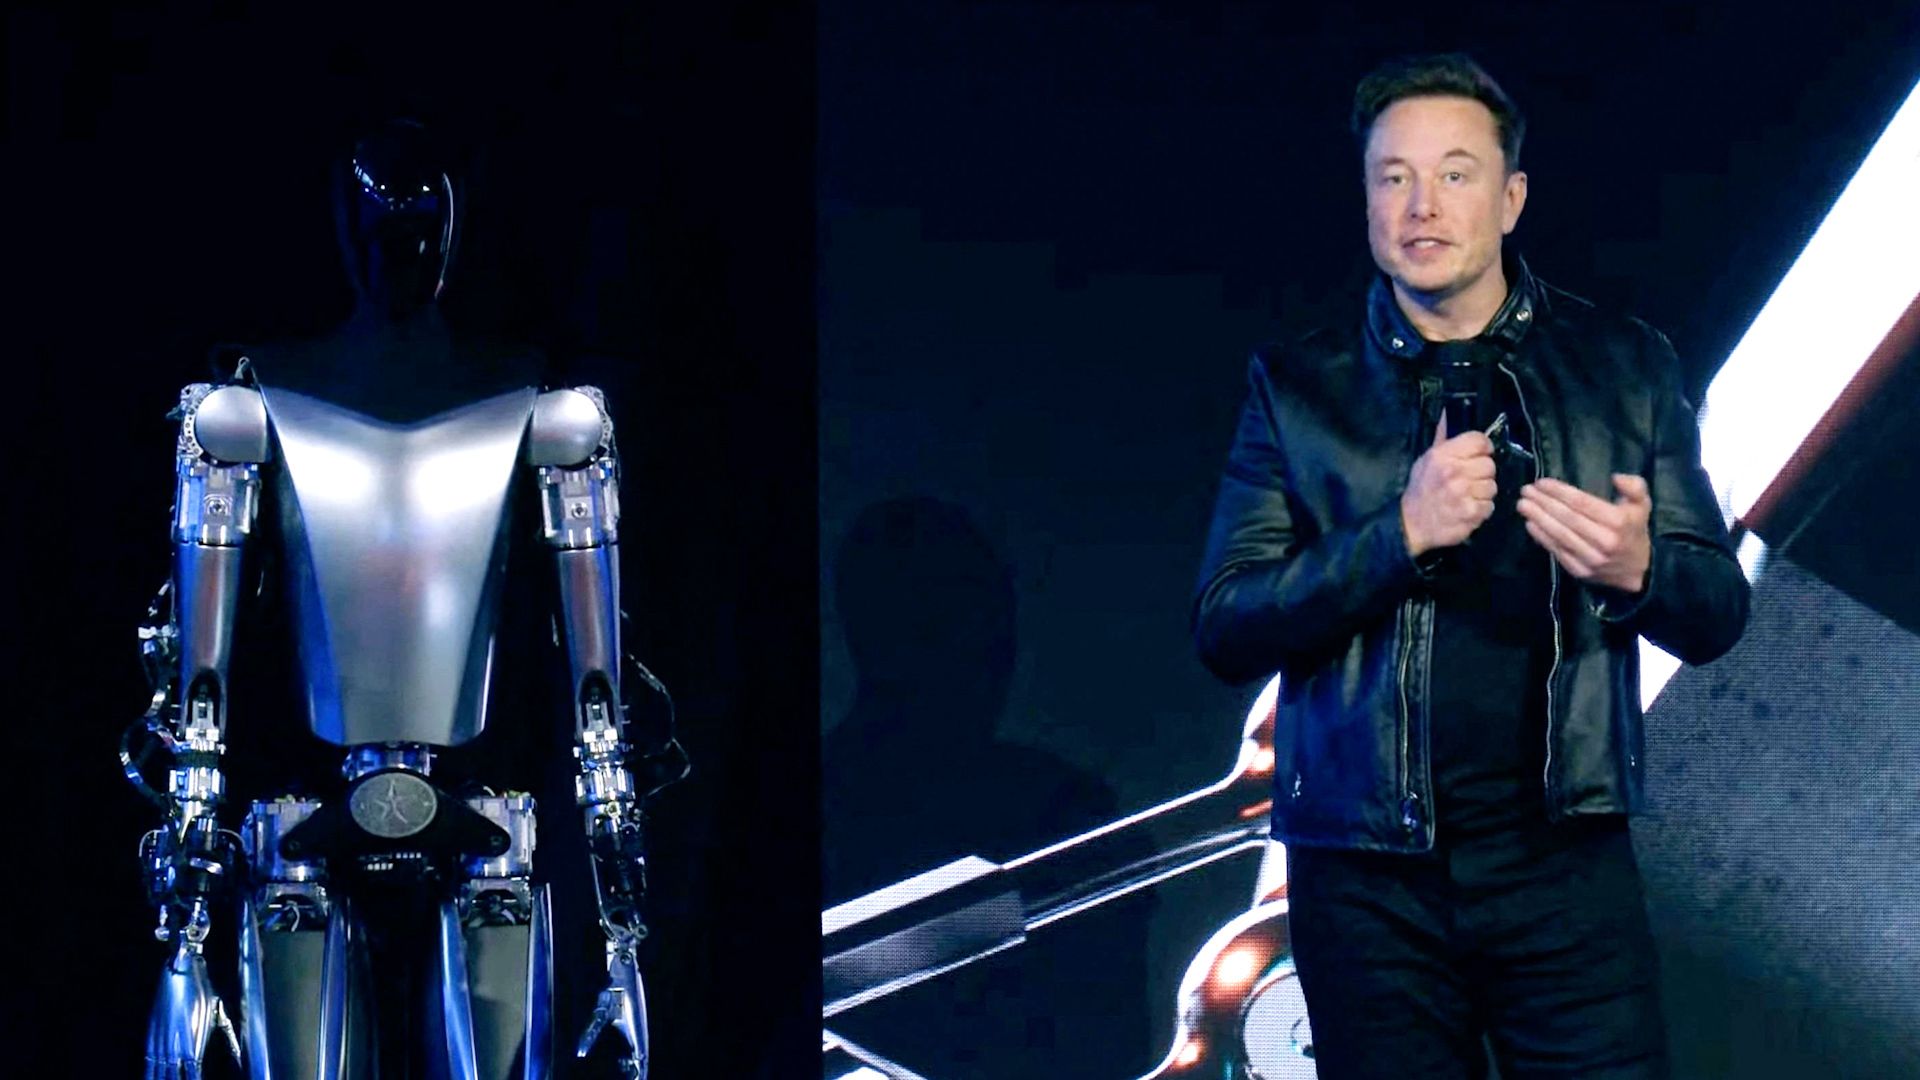 Tesla's robot image